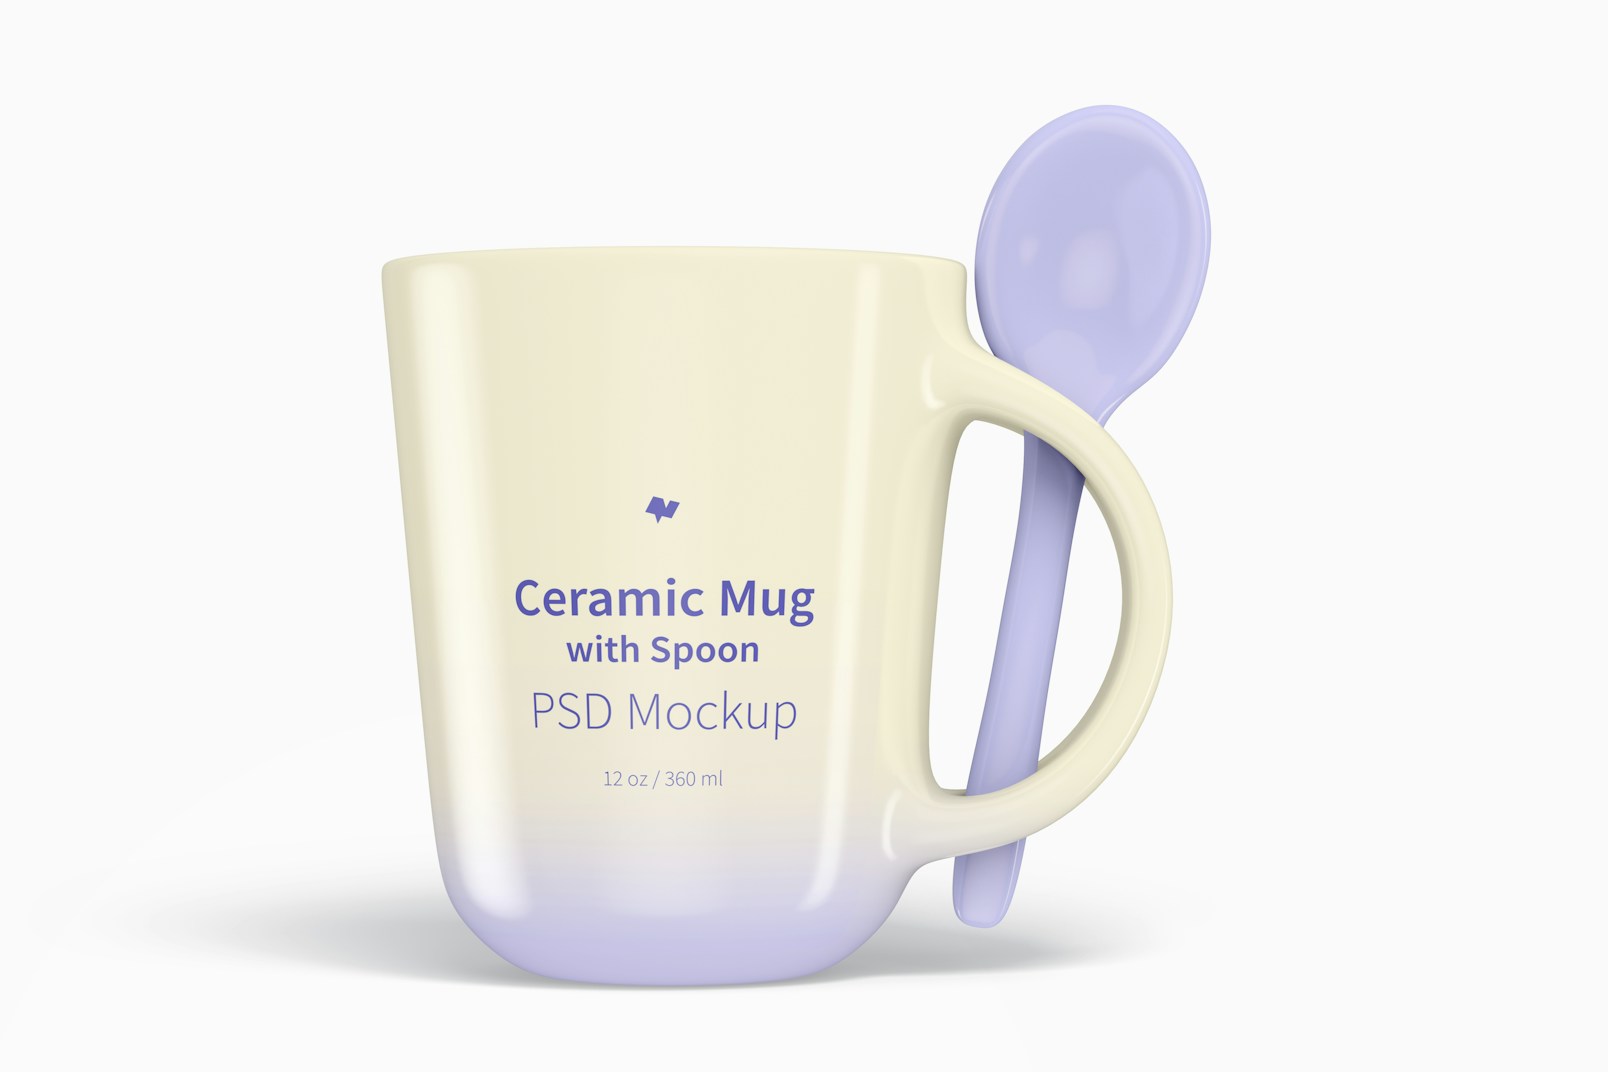 12 oz Ceramic Mug with Spoon Mockup, Front View